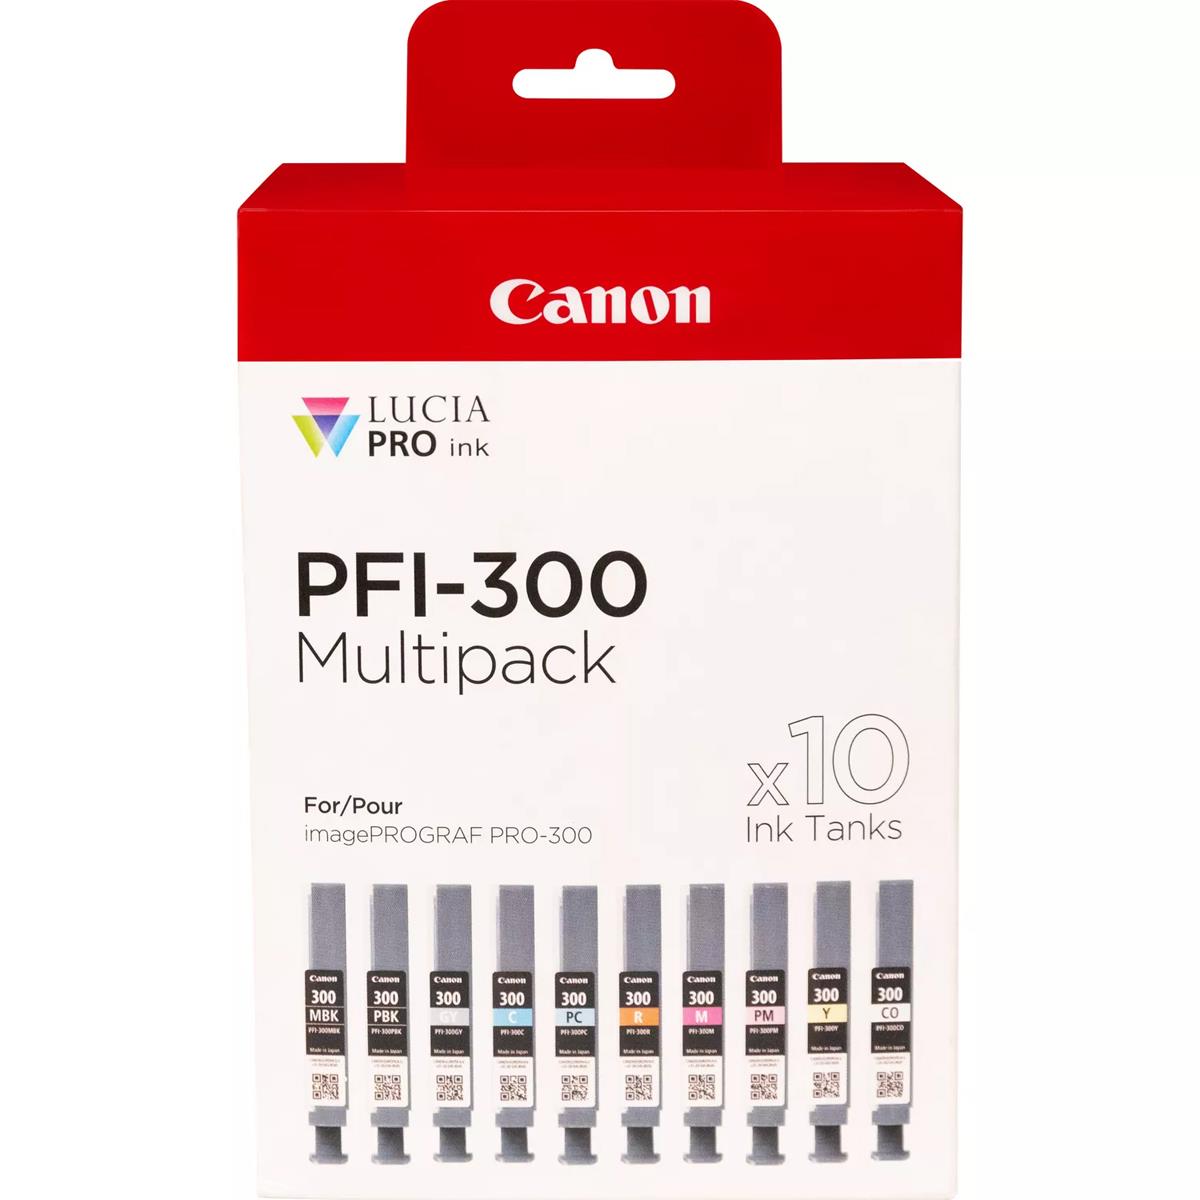 Canon PFI-300 Multipack Tinte MBK/PBK/CO/GY/R/C/M/Y/PC/PM 10 für ImagePrograf PRO-300